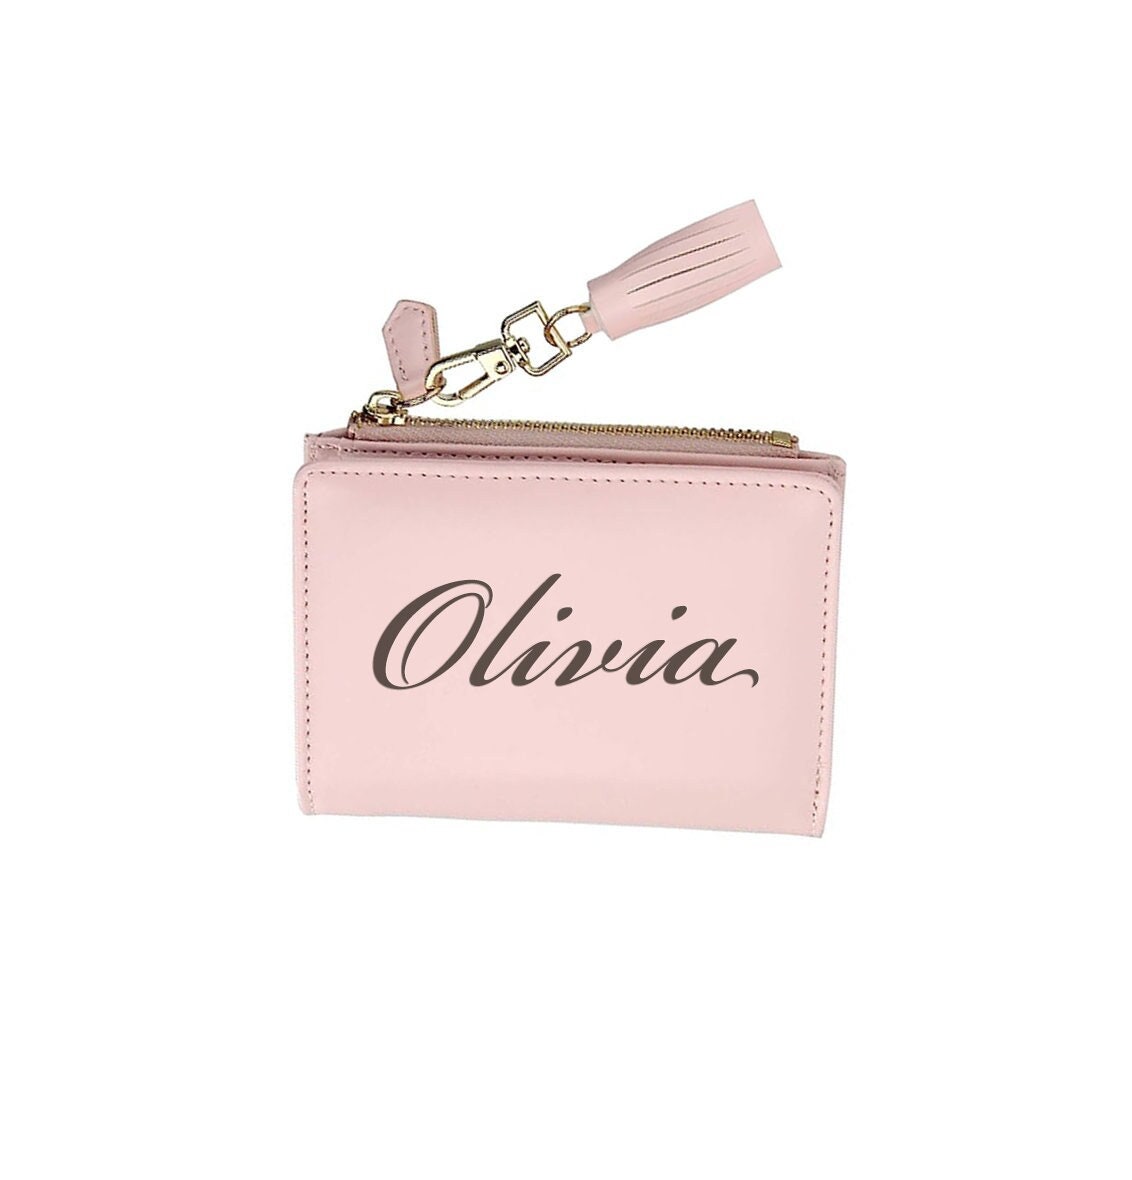 Olivia Compact Wallet - Black